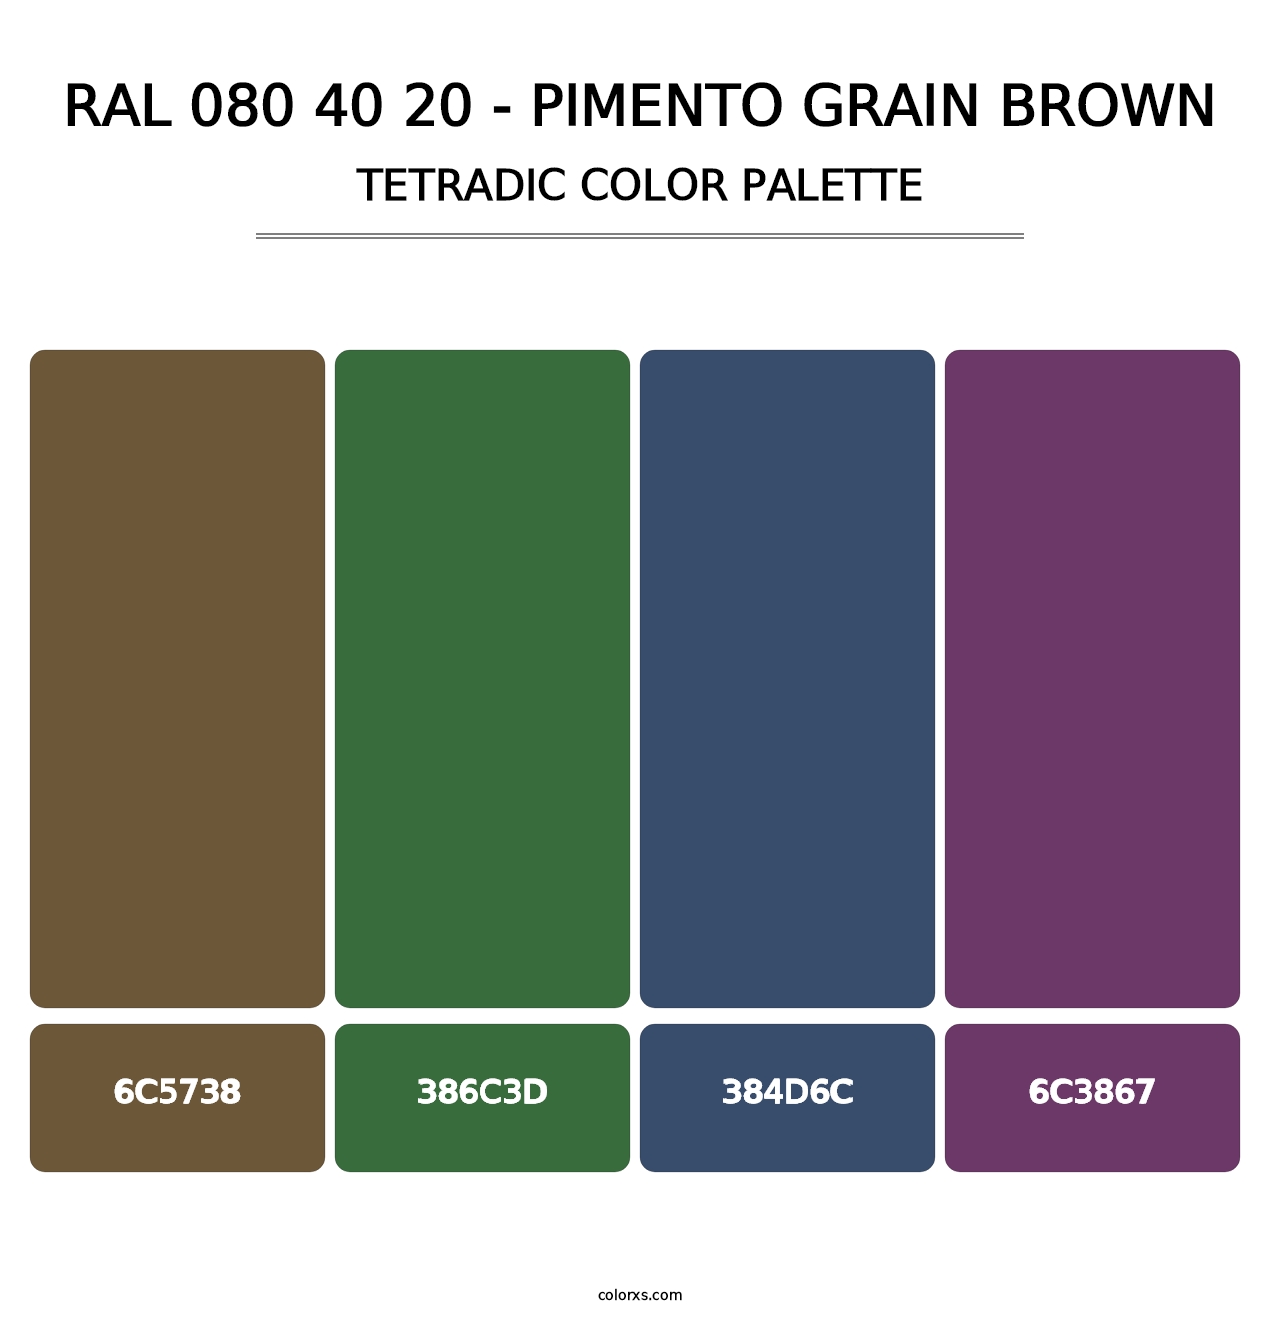 RAL 080 40 20 - Pimento Grain Brown - Tetradic Color Palette